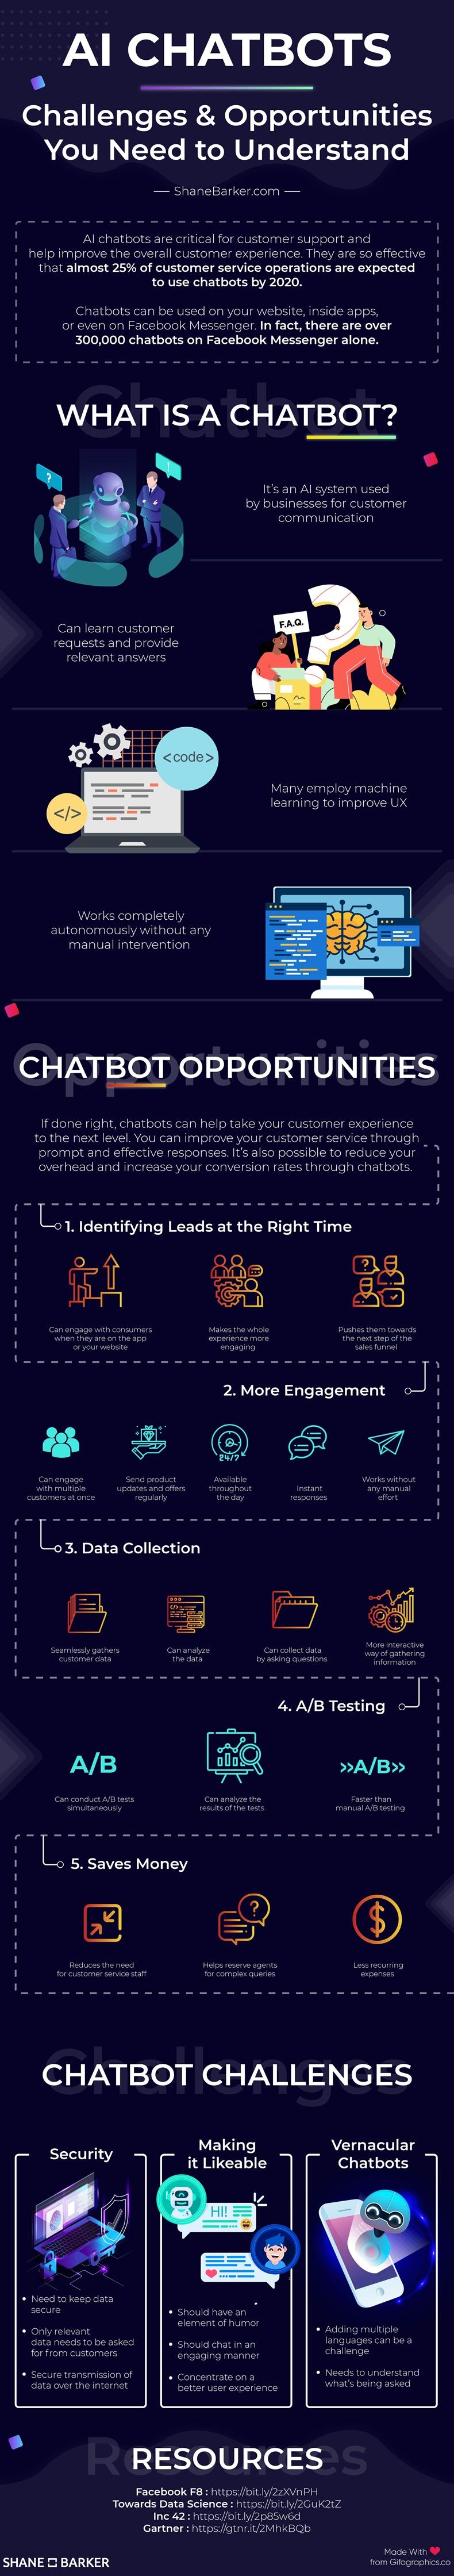 AI Chatbot Advantages and Challenges